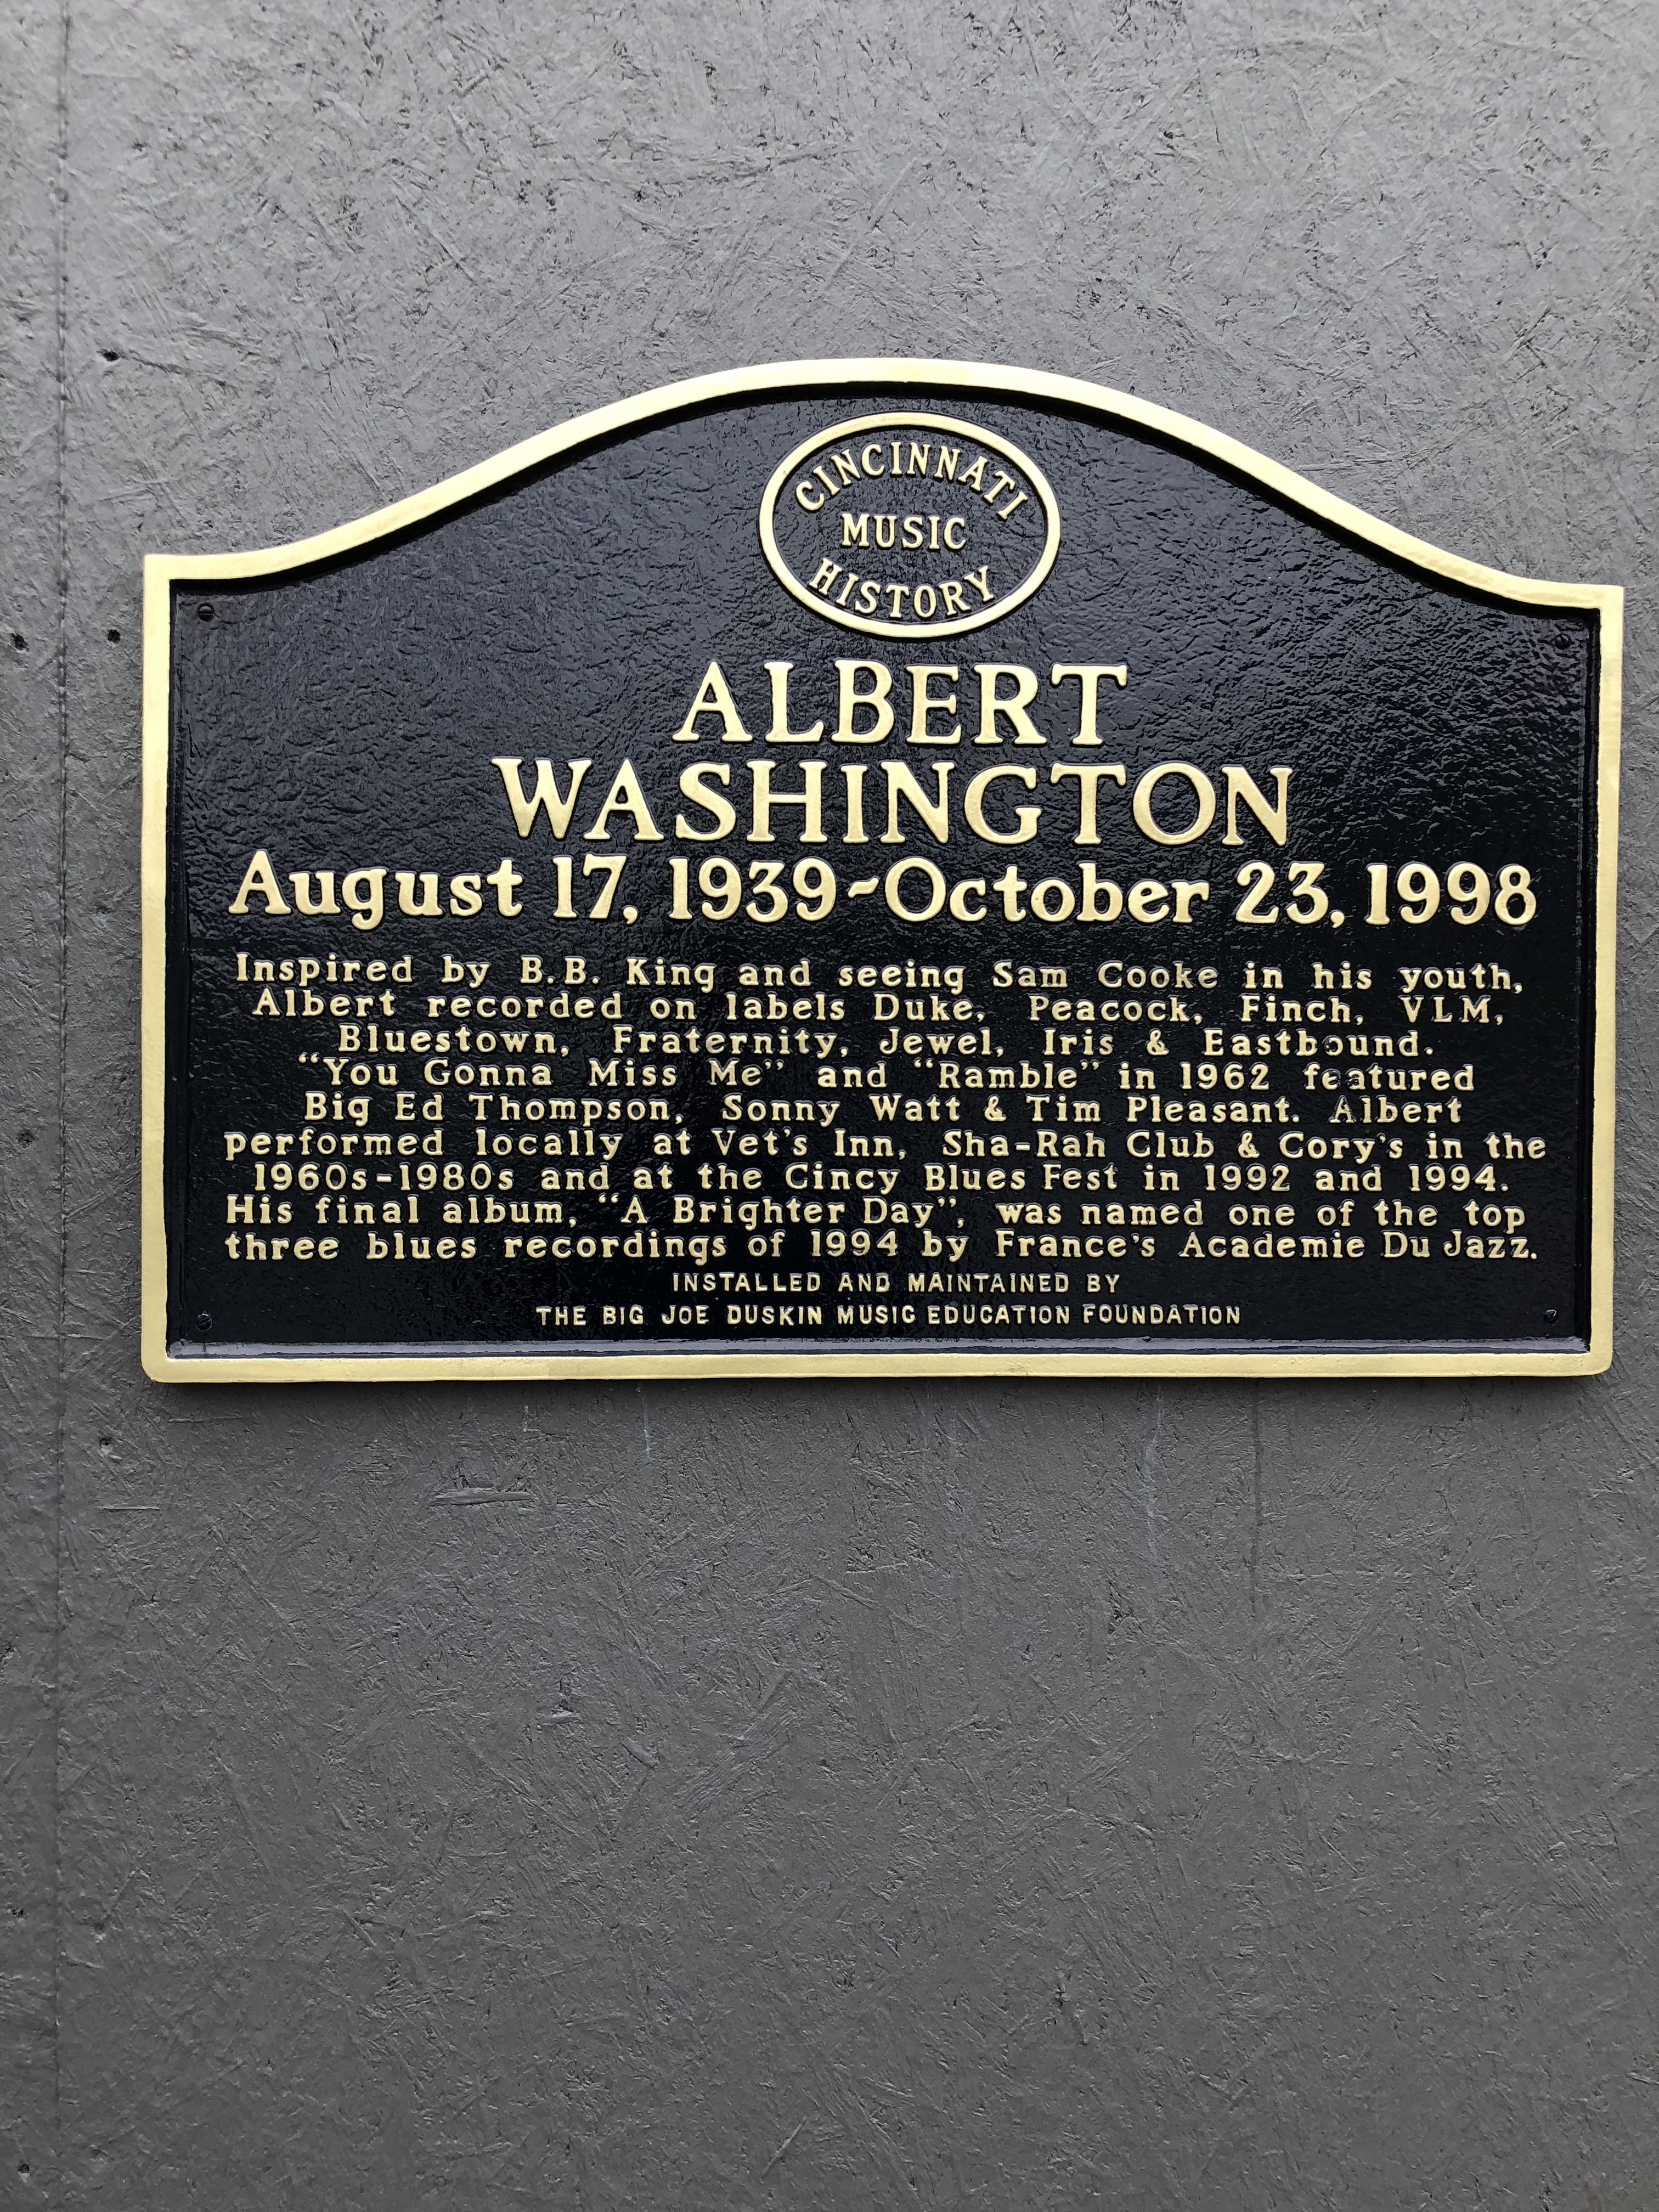 Albert washingtons historical marker located on west Mcmillian st